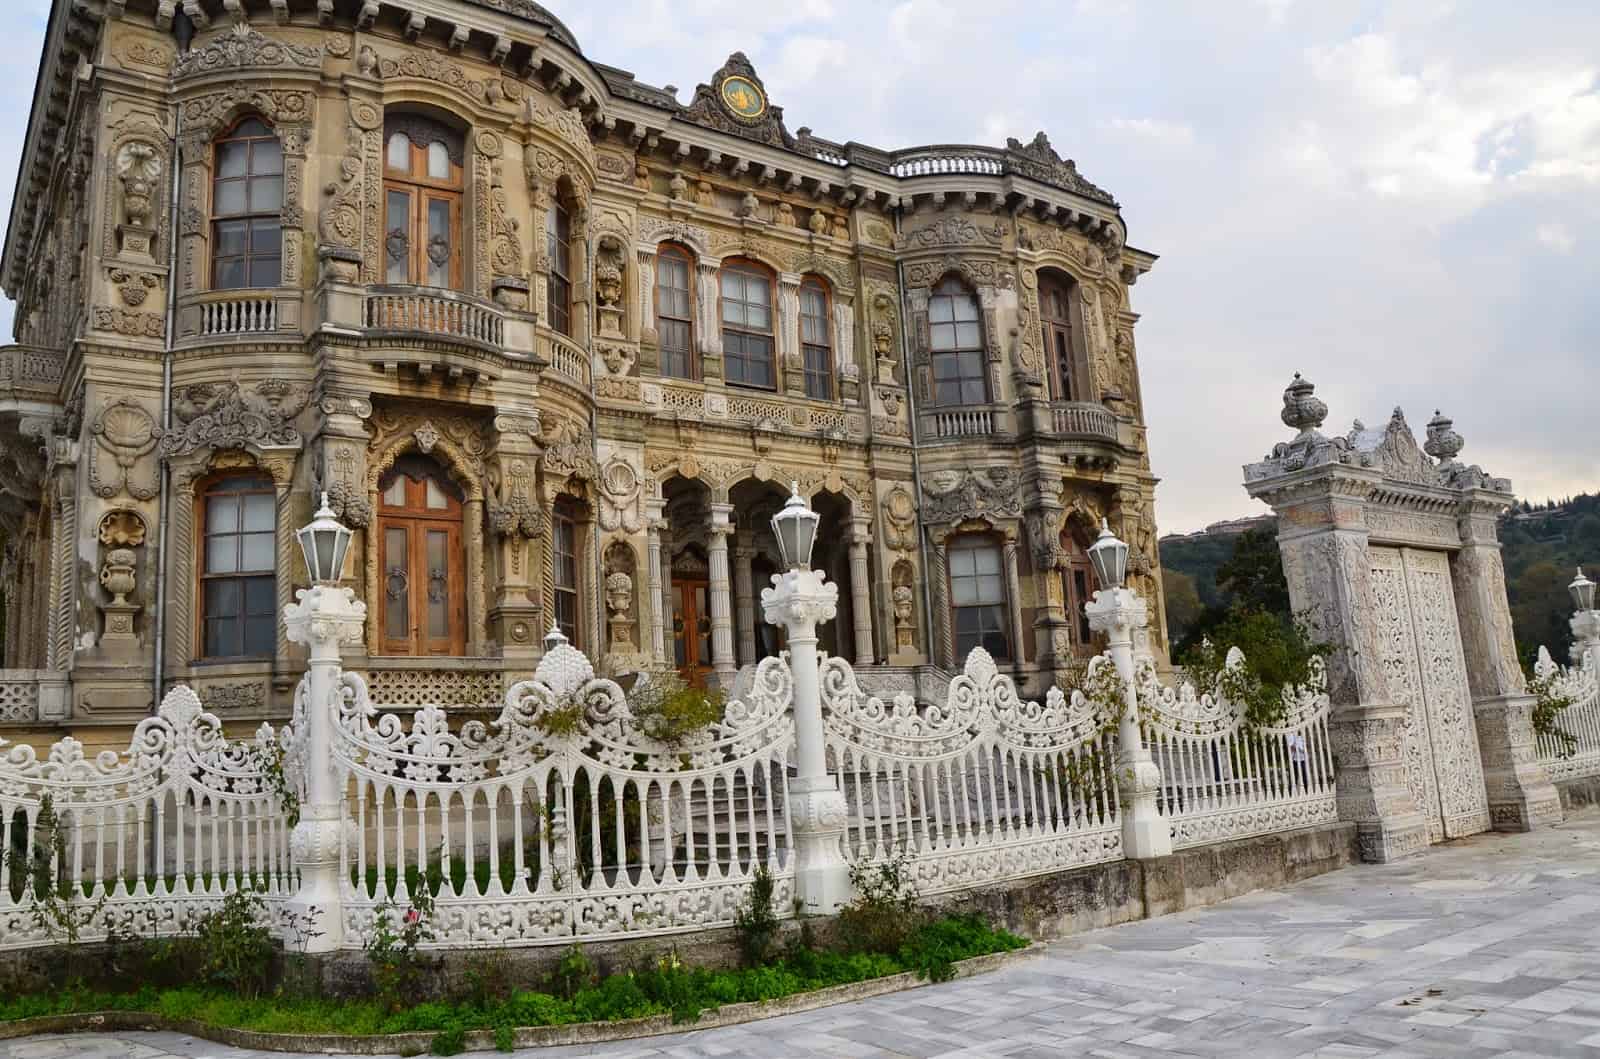 Küçüksu Pavilion in Istanbul, Turkey